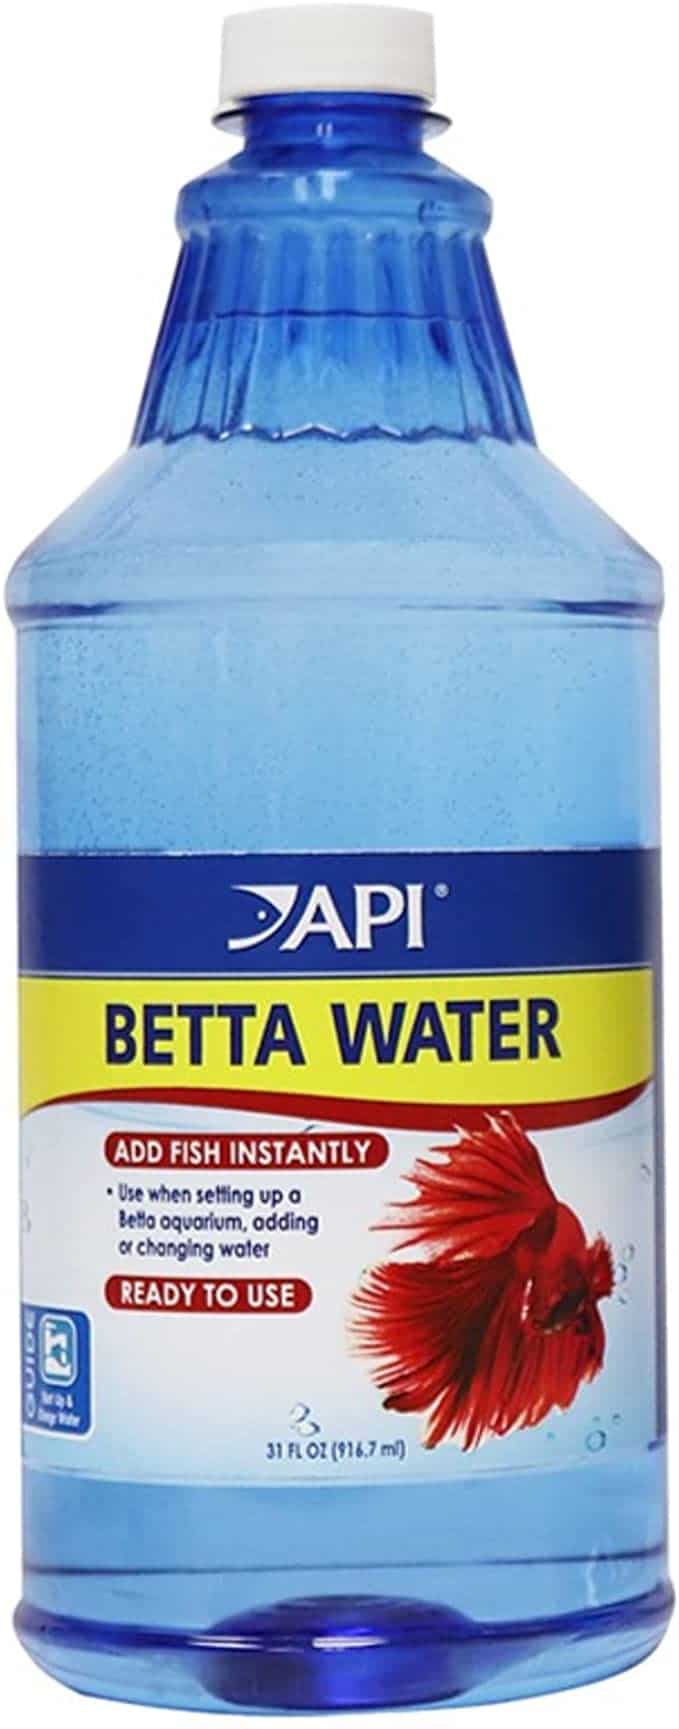 Betta Water